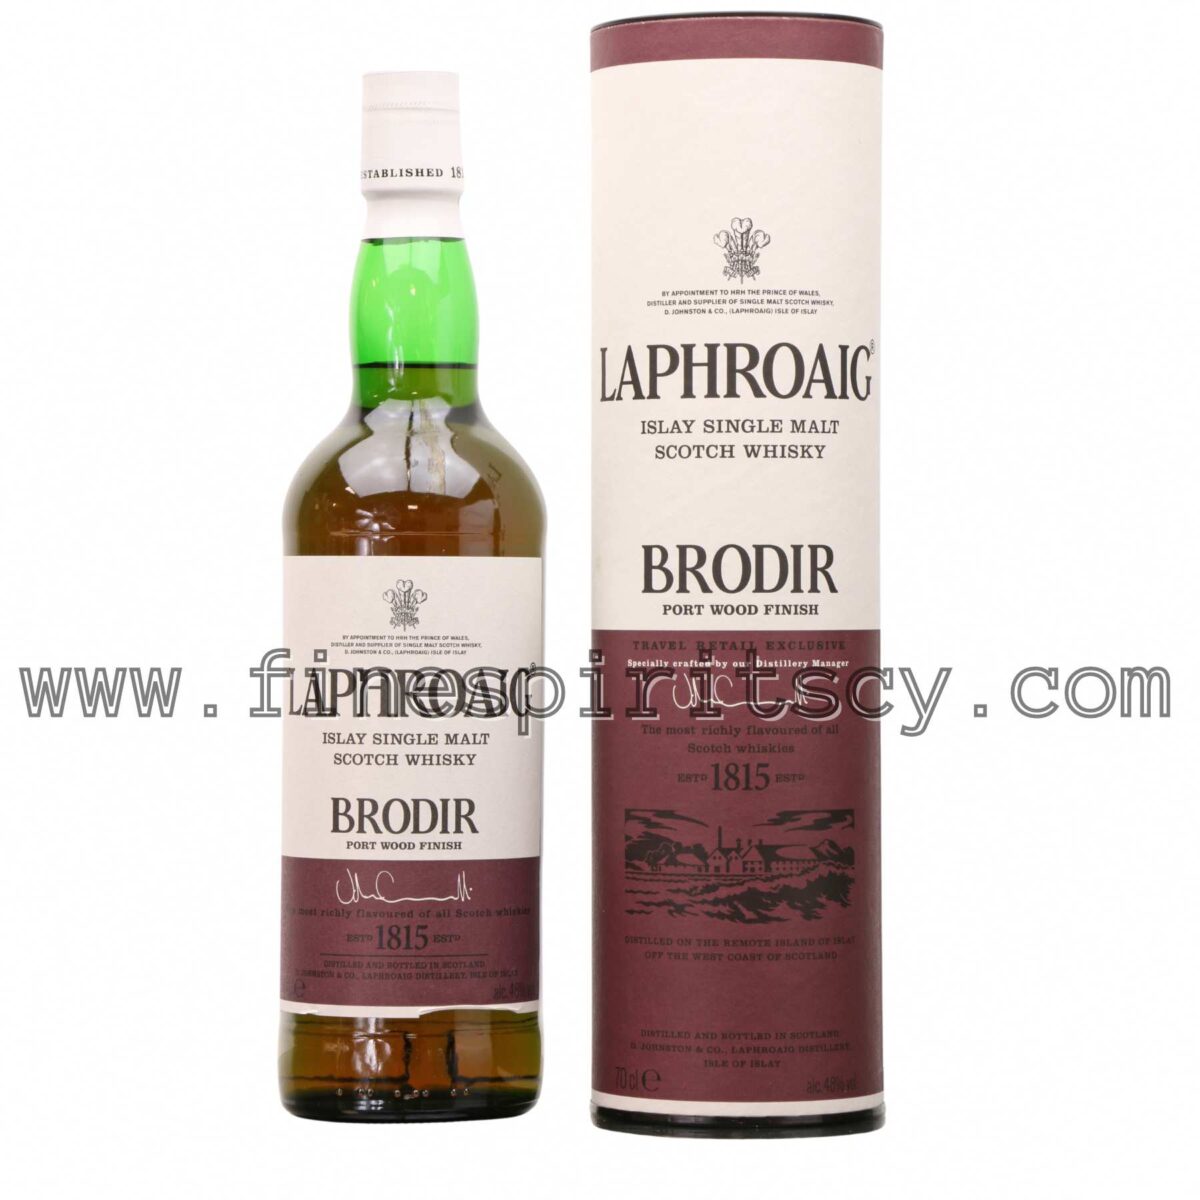 Laphroaig Brodir Port Wood Finish Cyprus Price Islay Scotch Whisky FSCY 700ml 70cl 0.7l